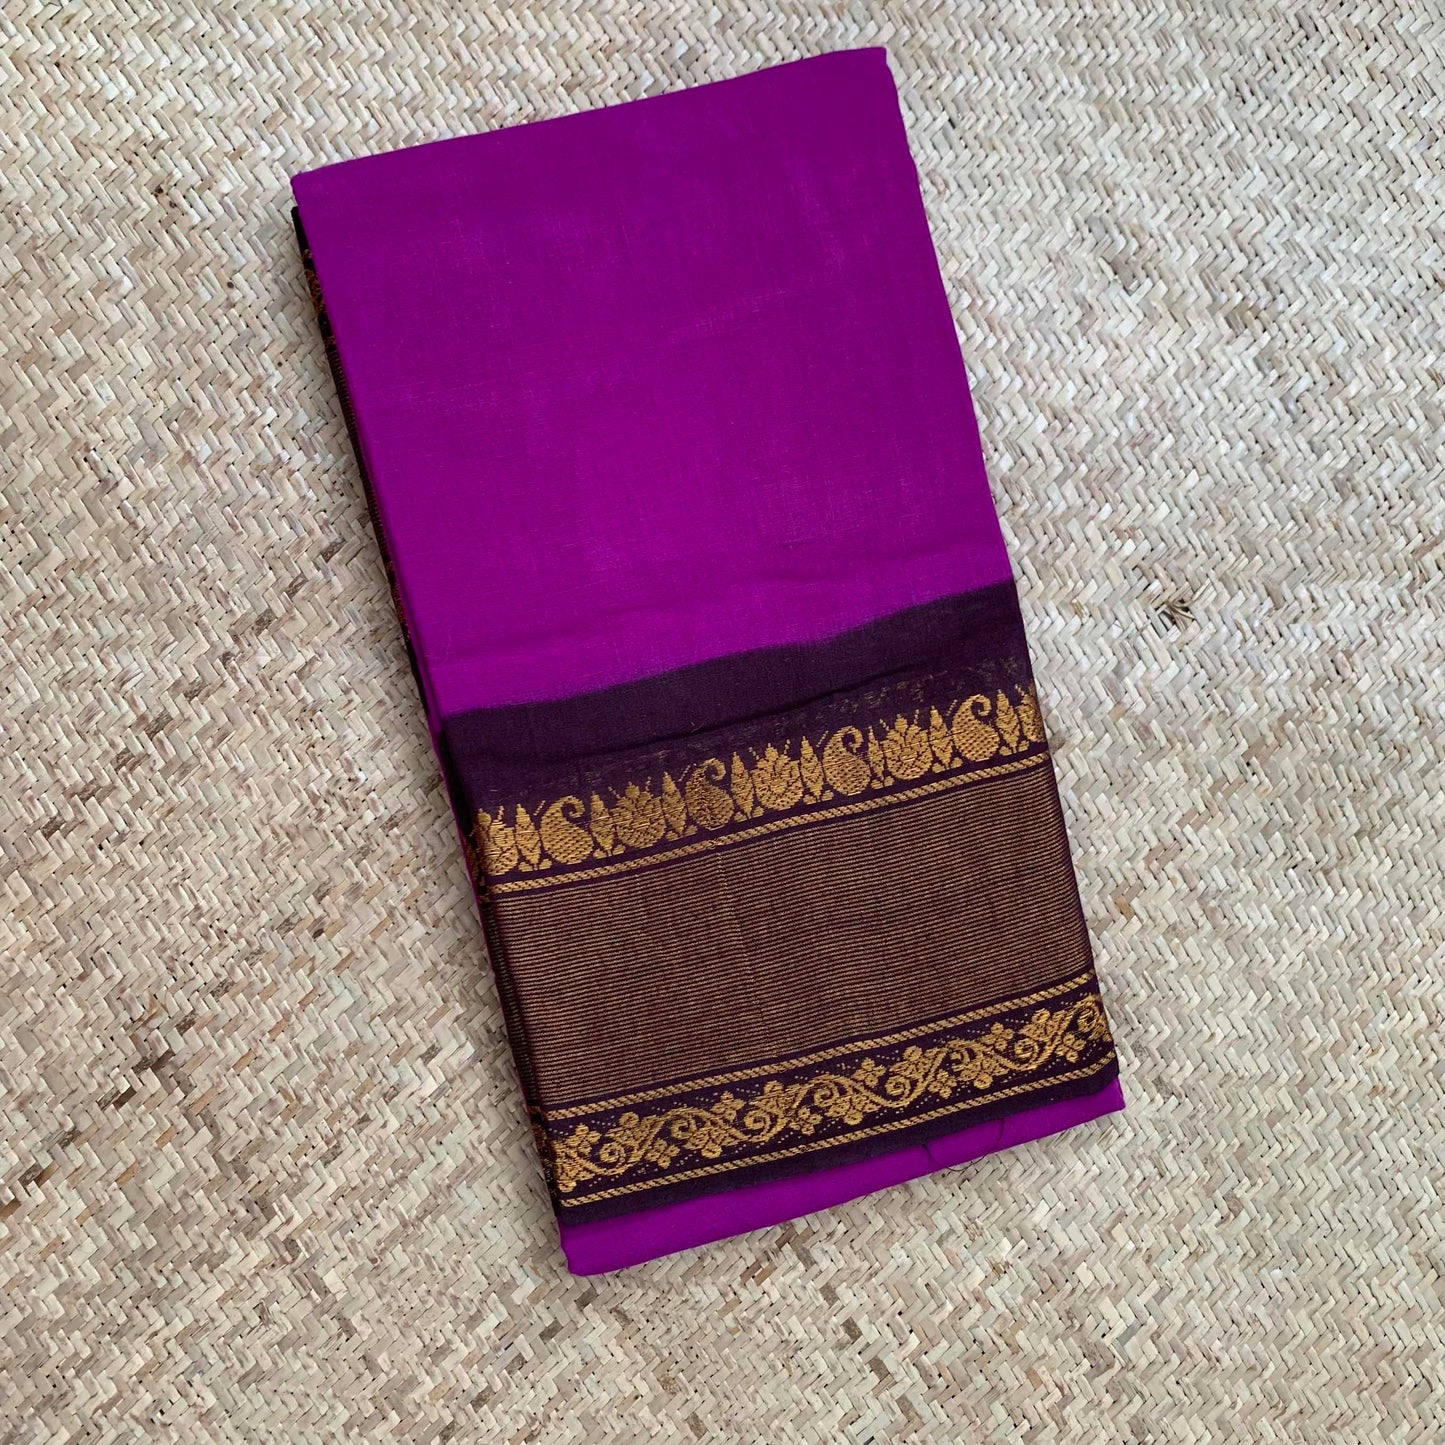 Purple Saree With Brown (Arakku) Border Zari Getti Pettu Zari Border, Clamp dyed (Kattu sayam).